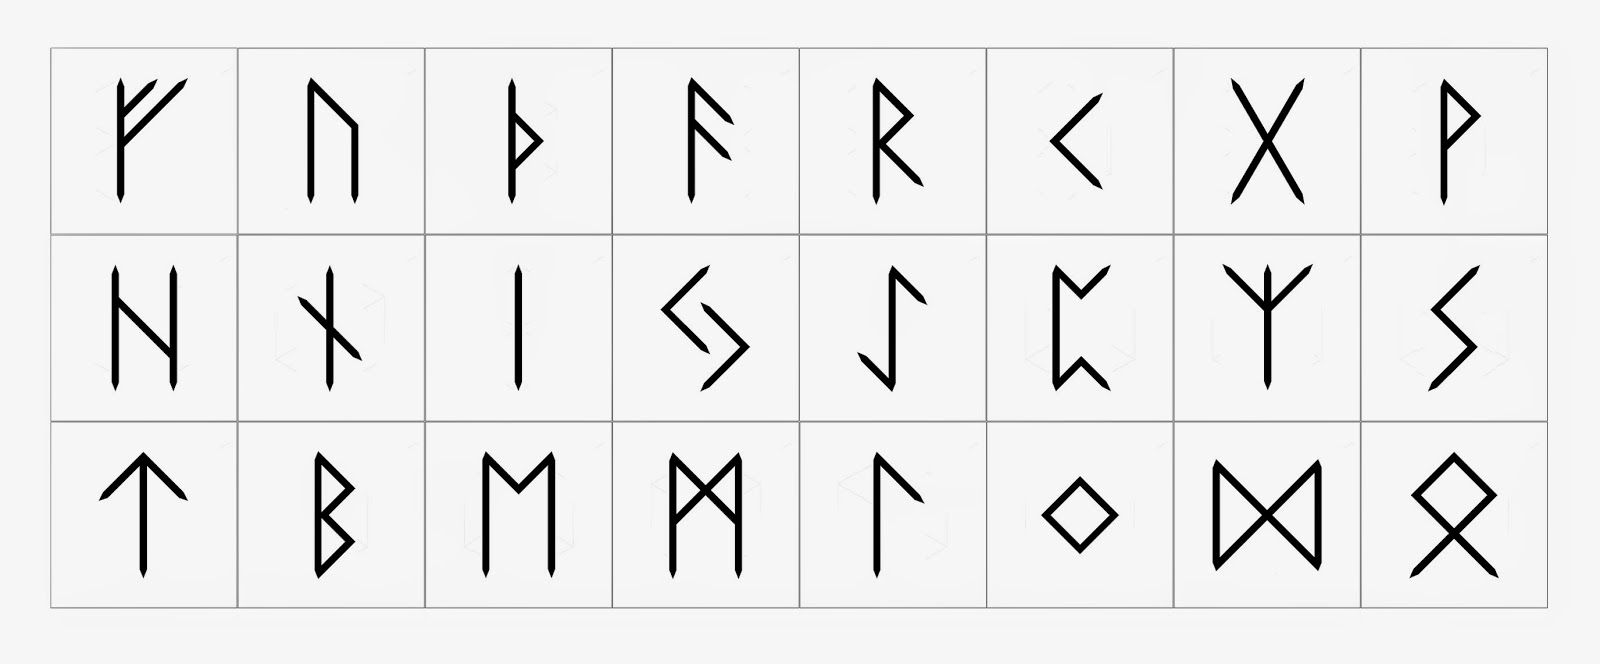 Real Rune Magick: The Armanen runes in Historical Context